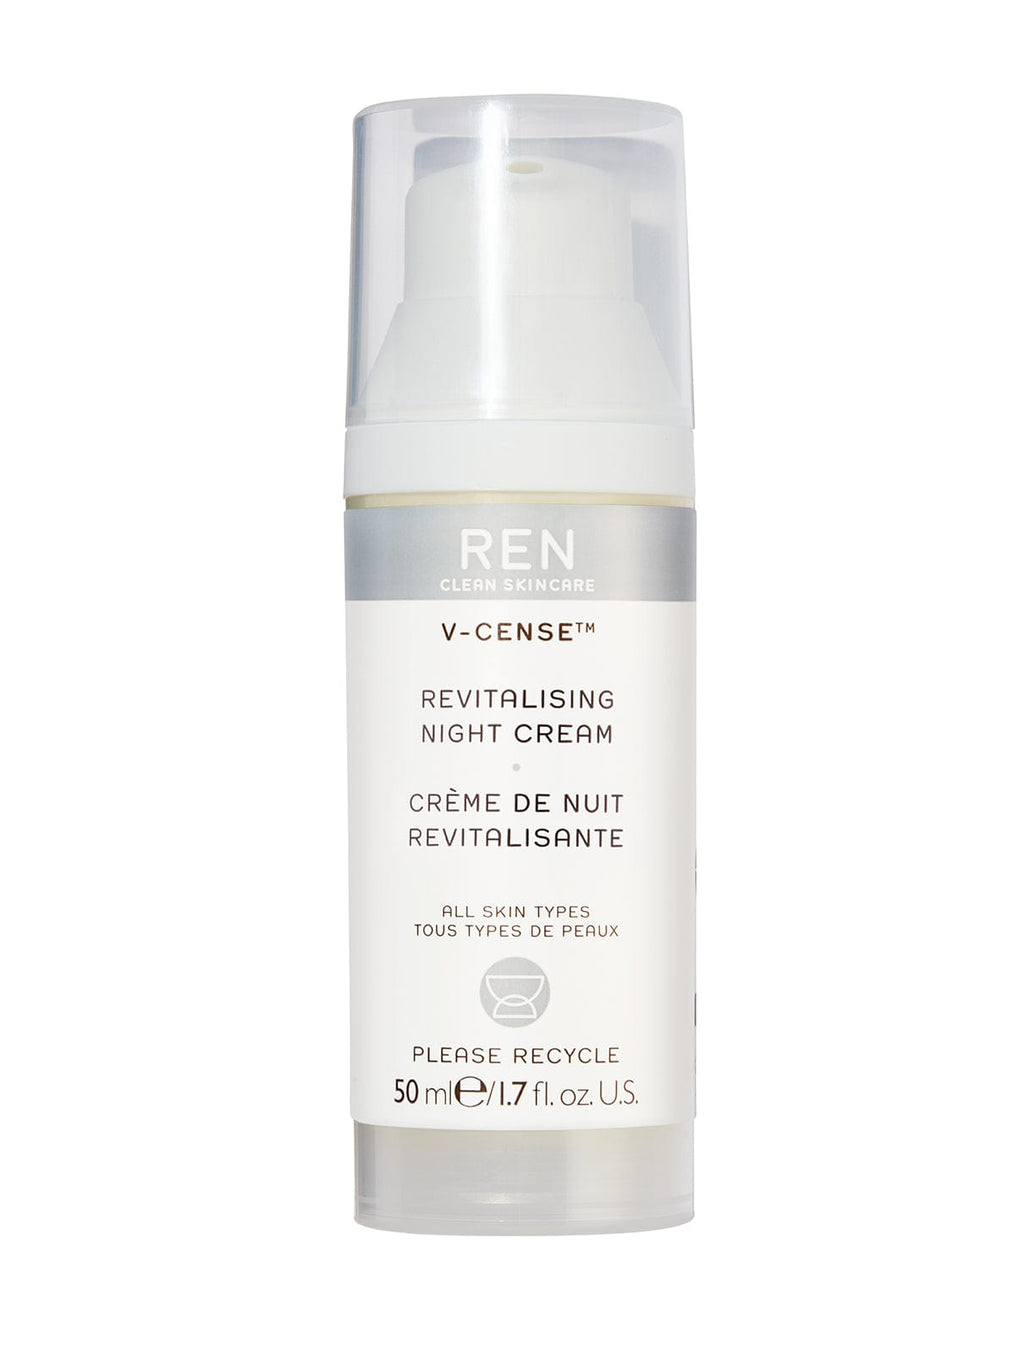 REN - Revitalising night cream - The Natural Beauty Club